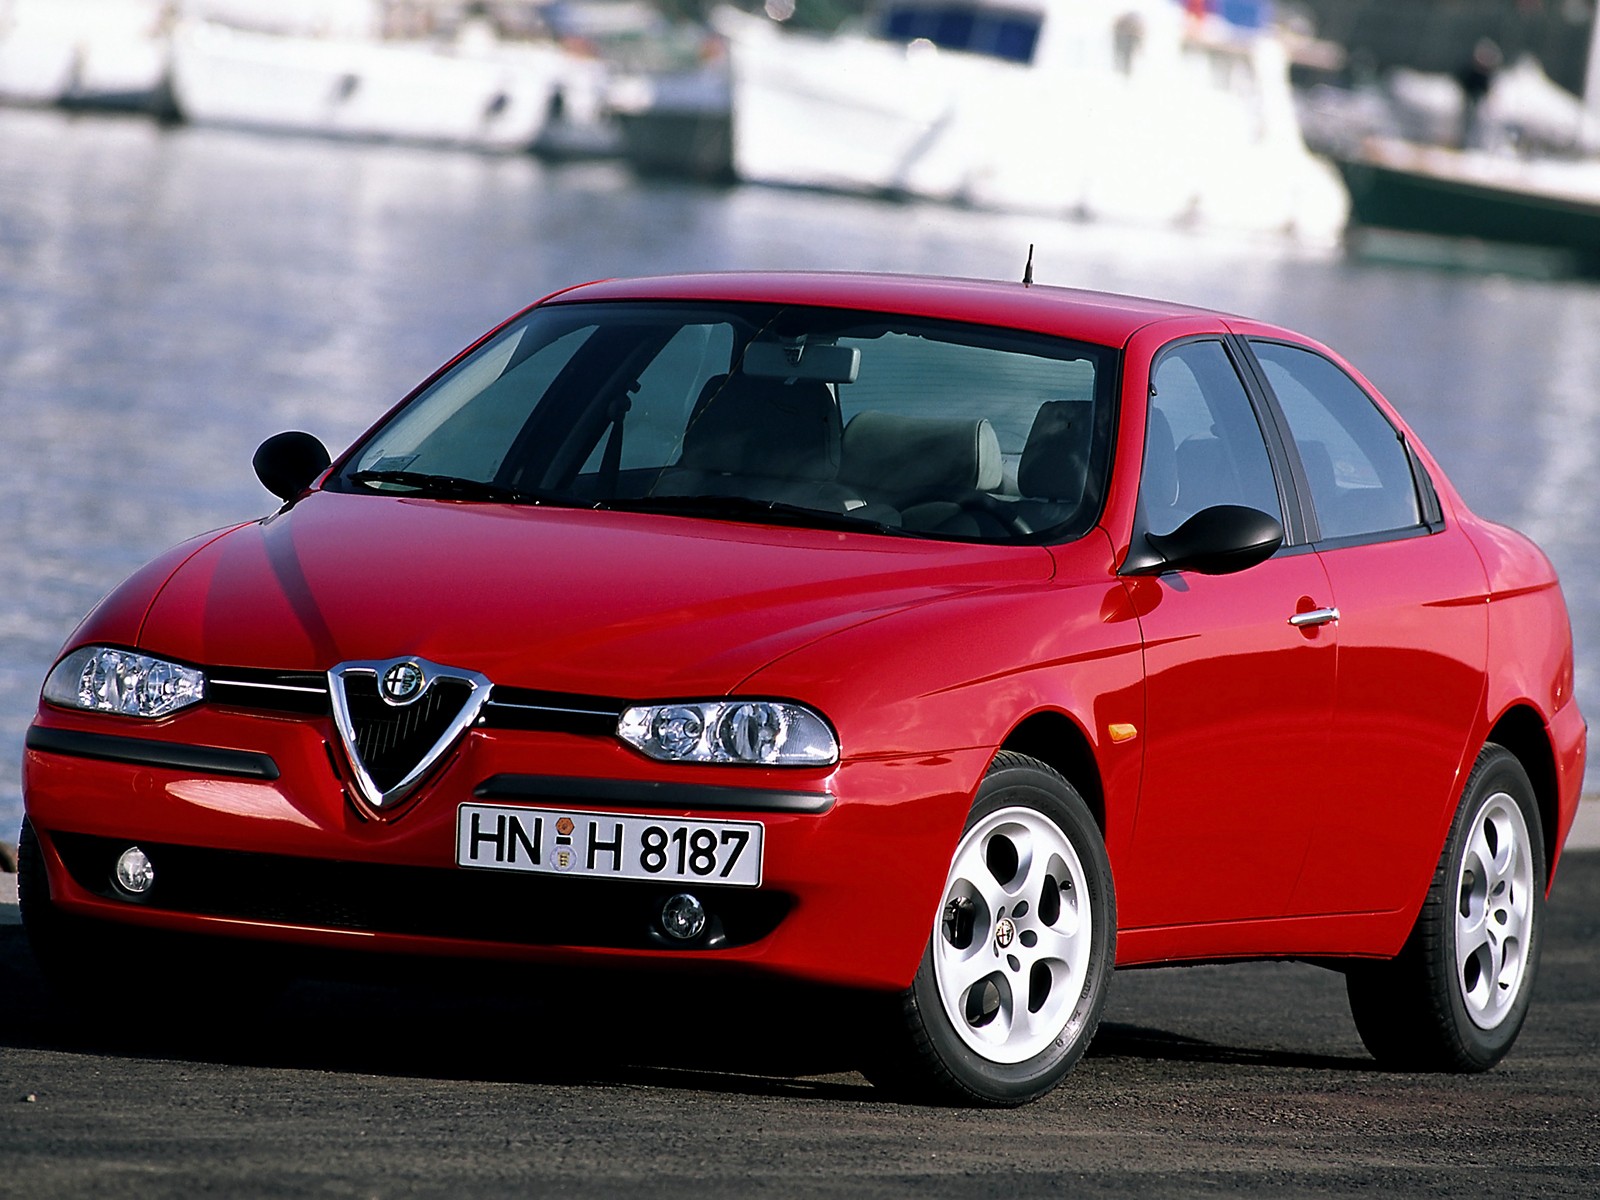 Alfa romeo 156 (1997)